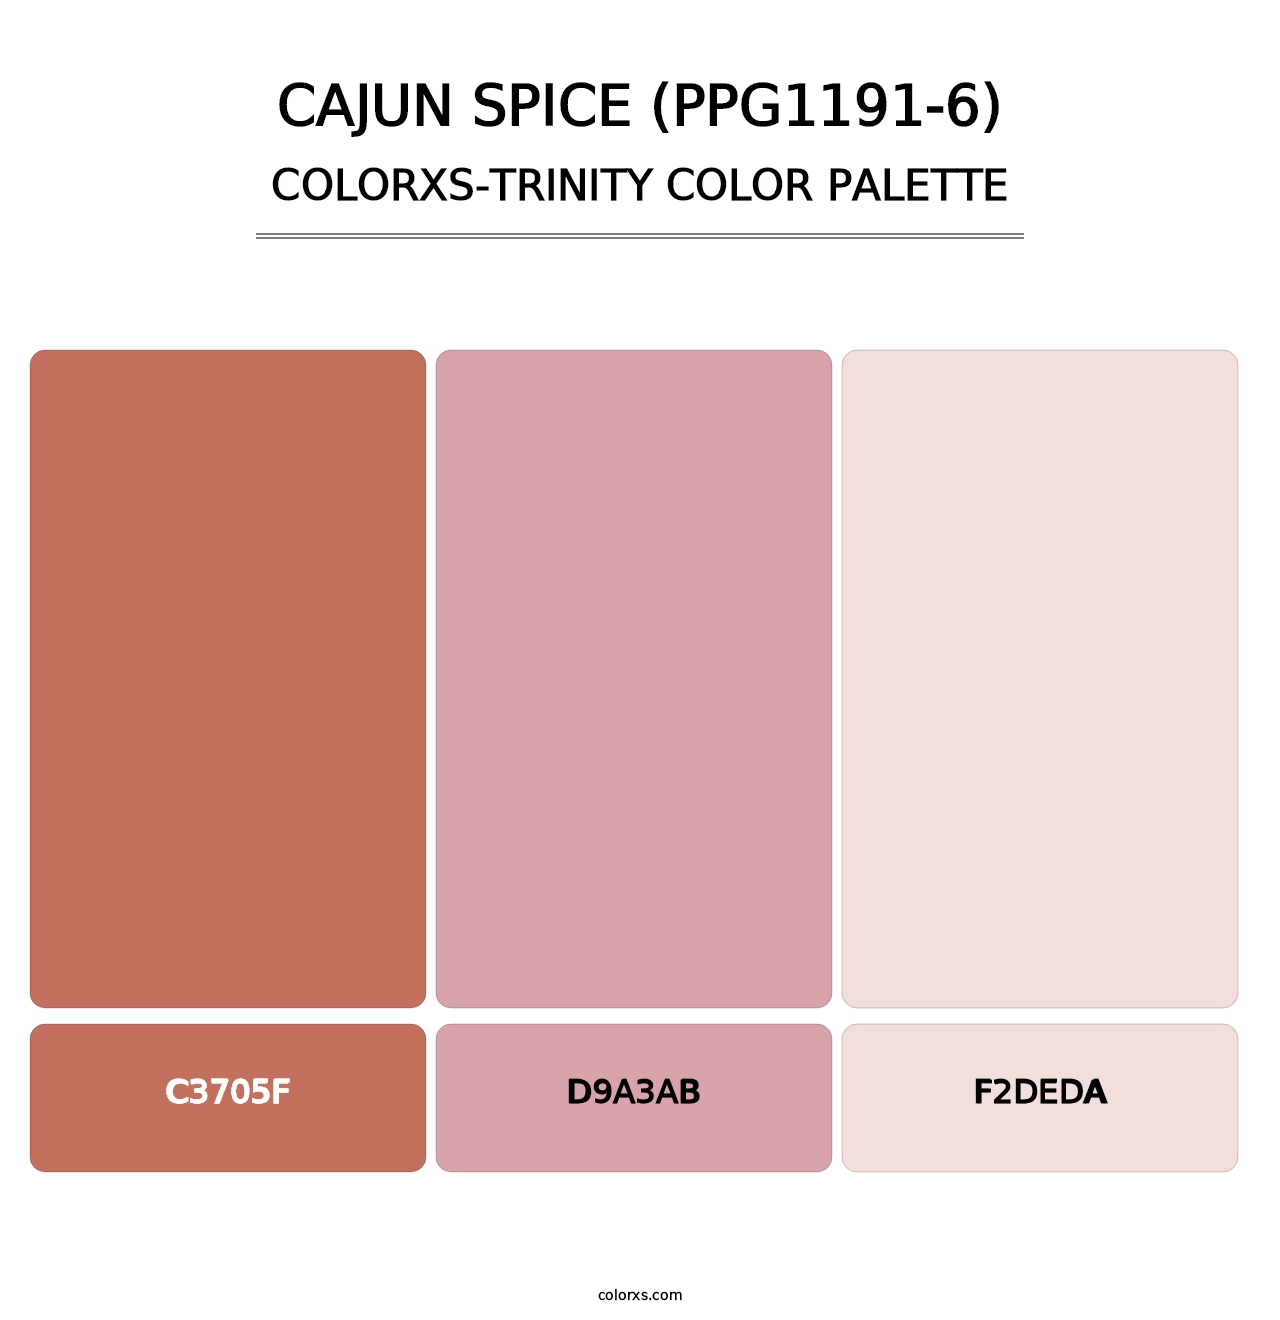 Cajun Spice (PPG1191-6) - Colorxs Trinity Palette